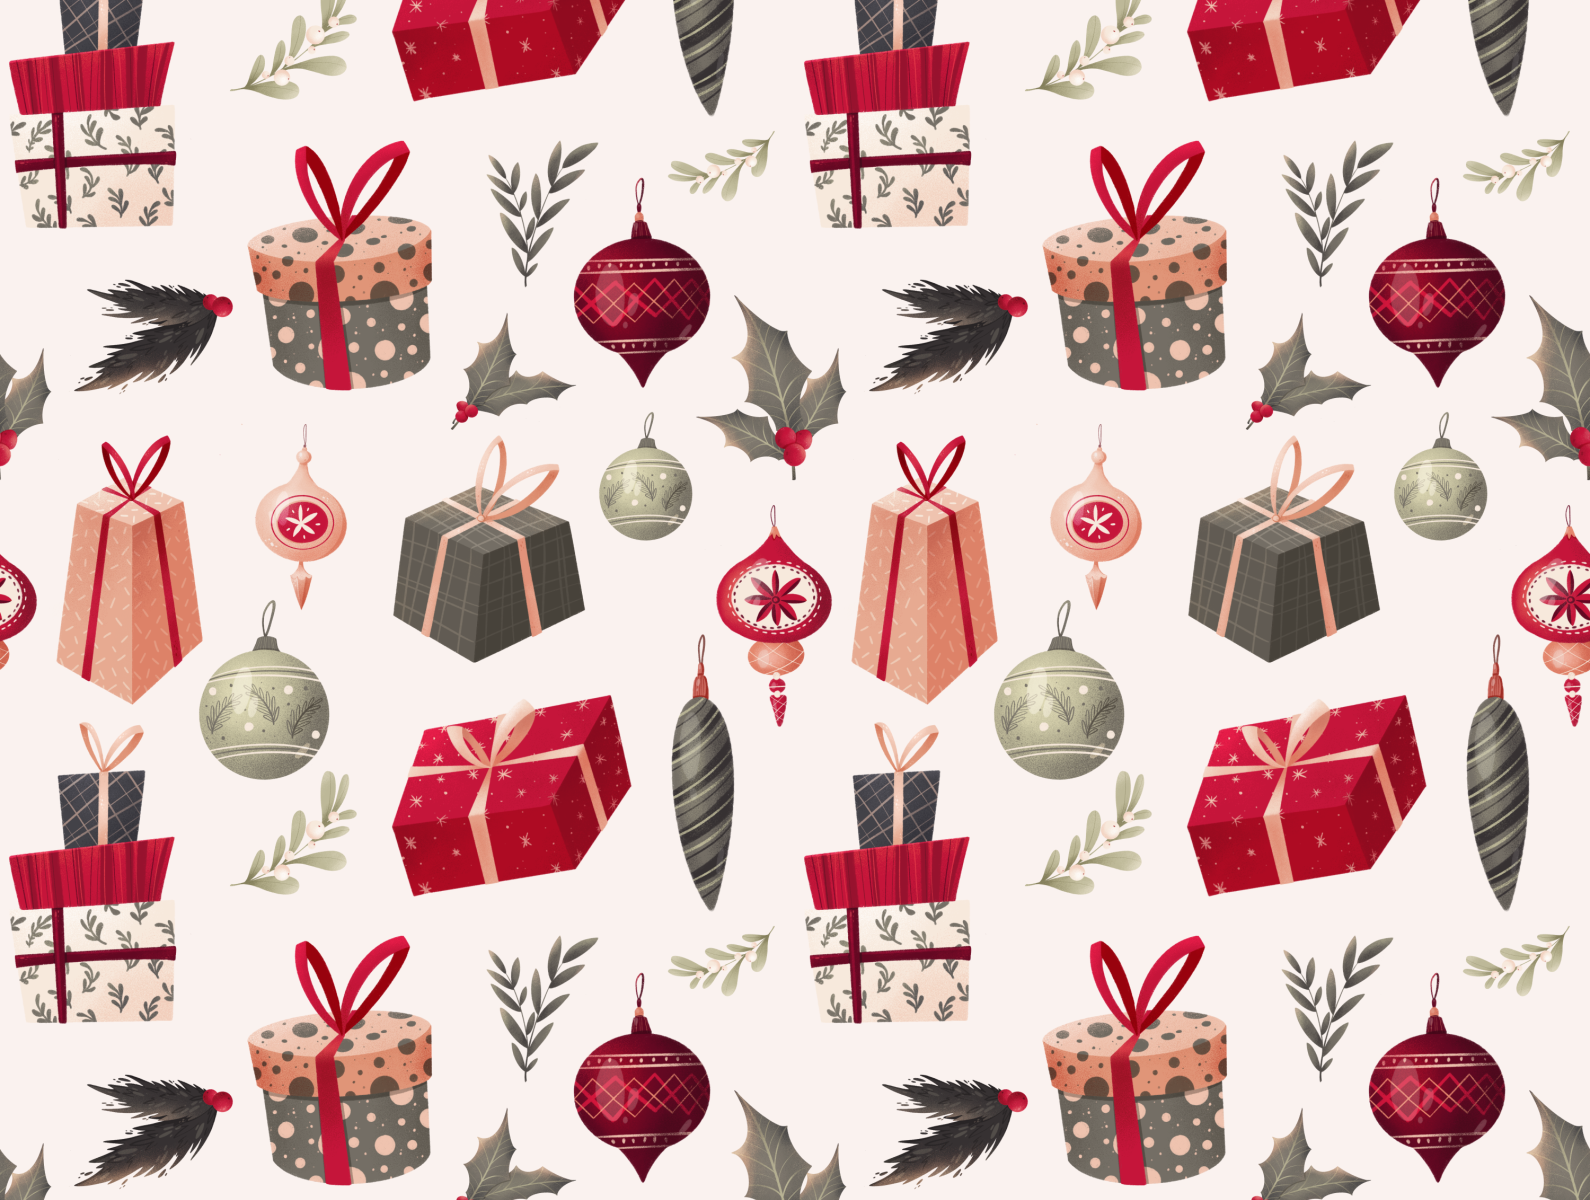 Christmas Pattern by Anastasia Cartovenco (Karmina Art) on Dribbble